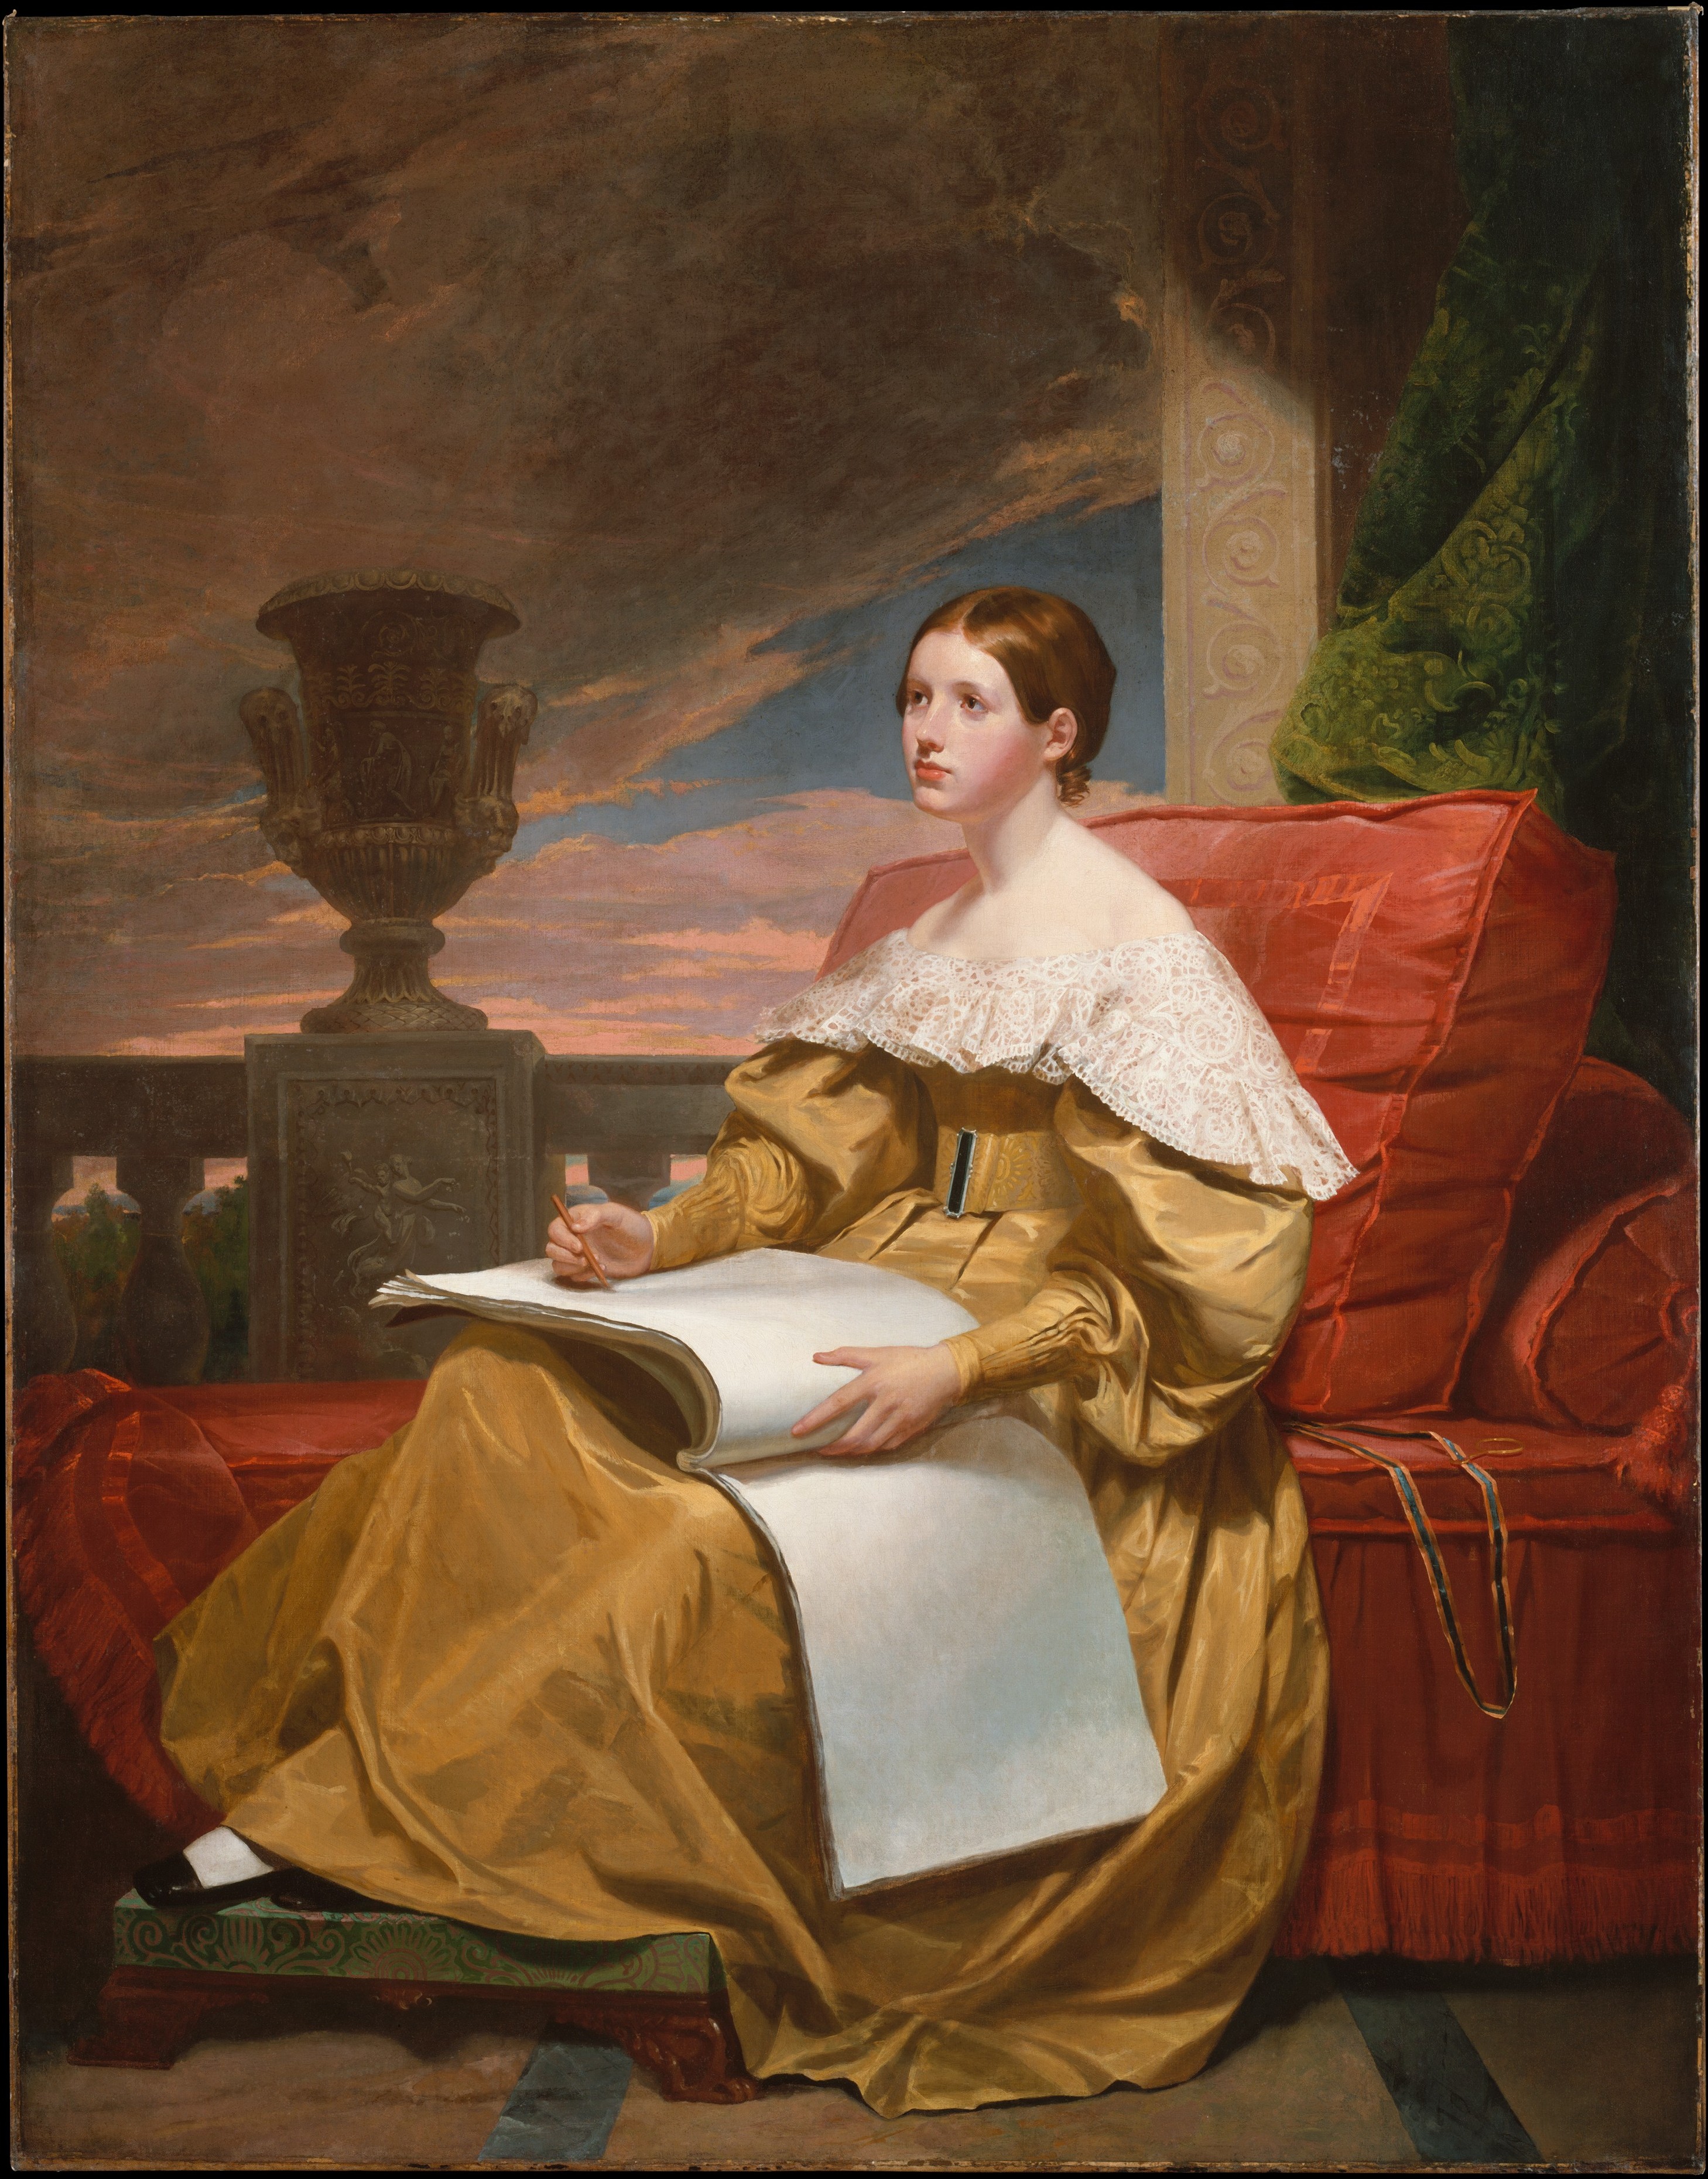 Susan Walker Morse (A Musa) by Samuel F. B. Morse - c. 1836-37 - 187.3 x 146.4 cm 